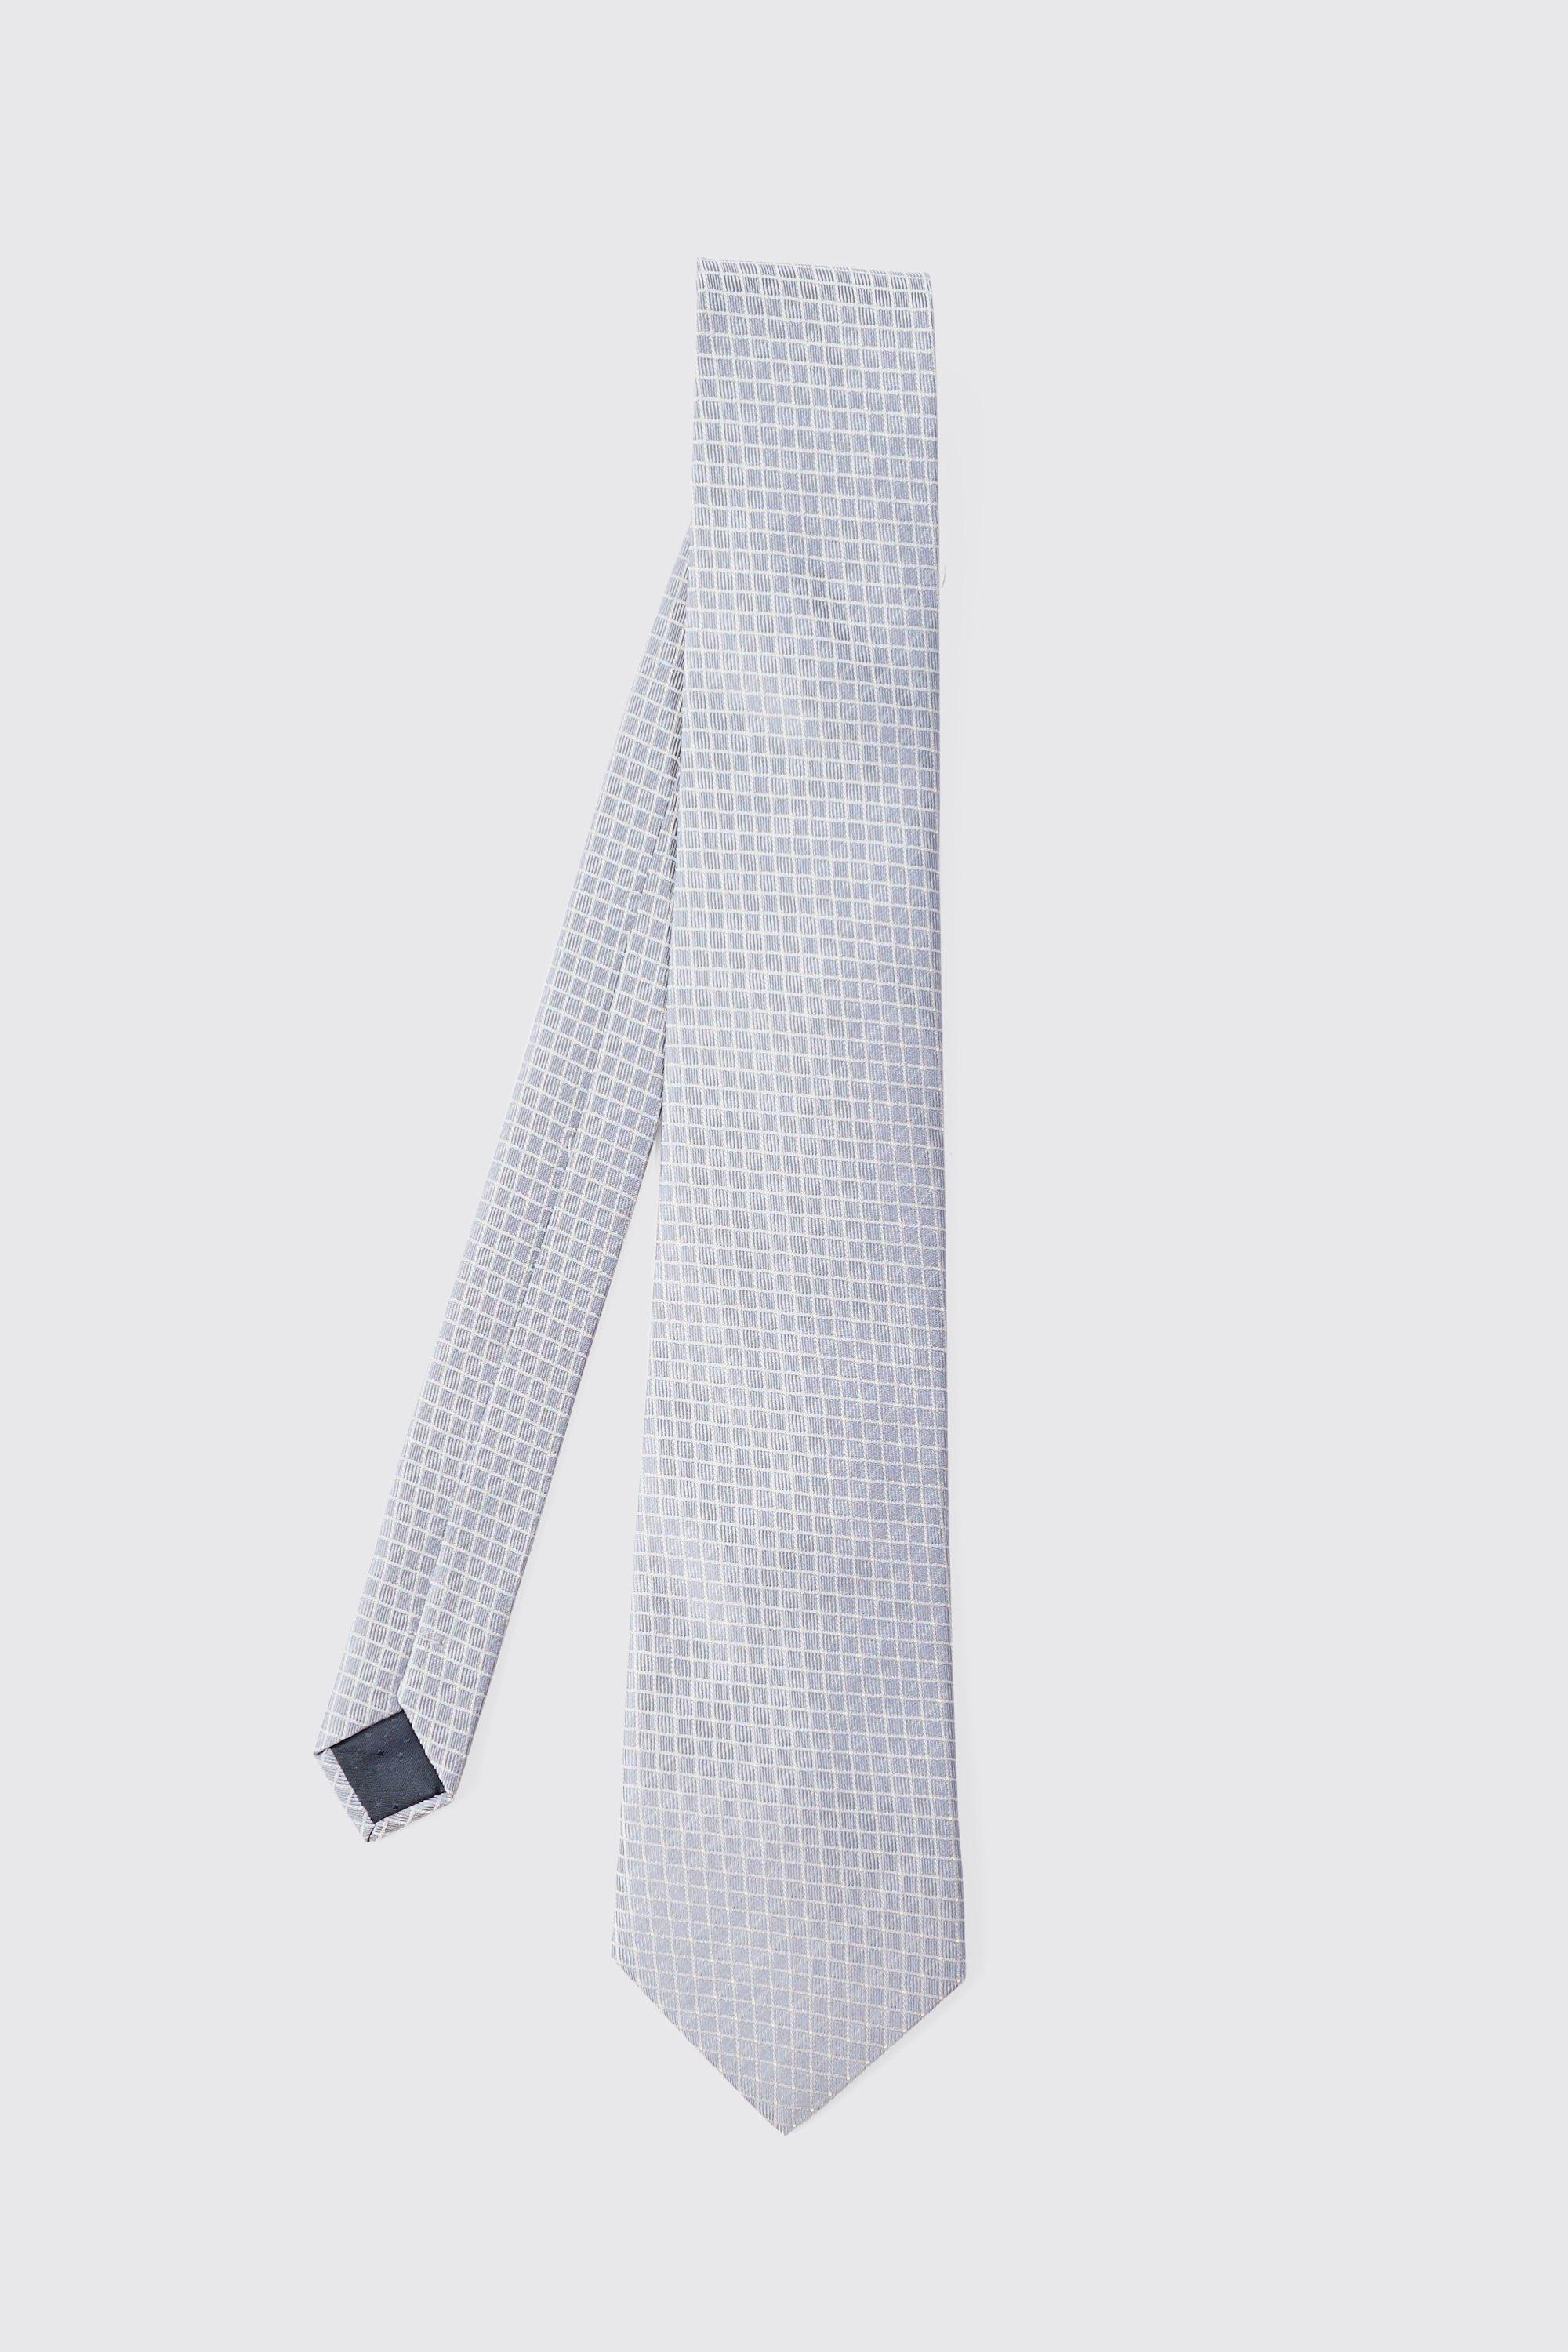 Image of Slim Satin Tie In Light Grey, Grigio